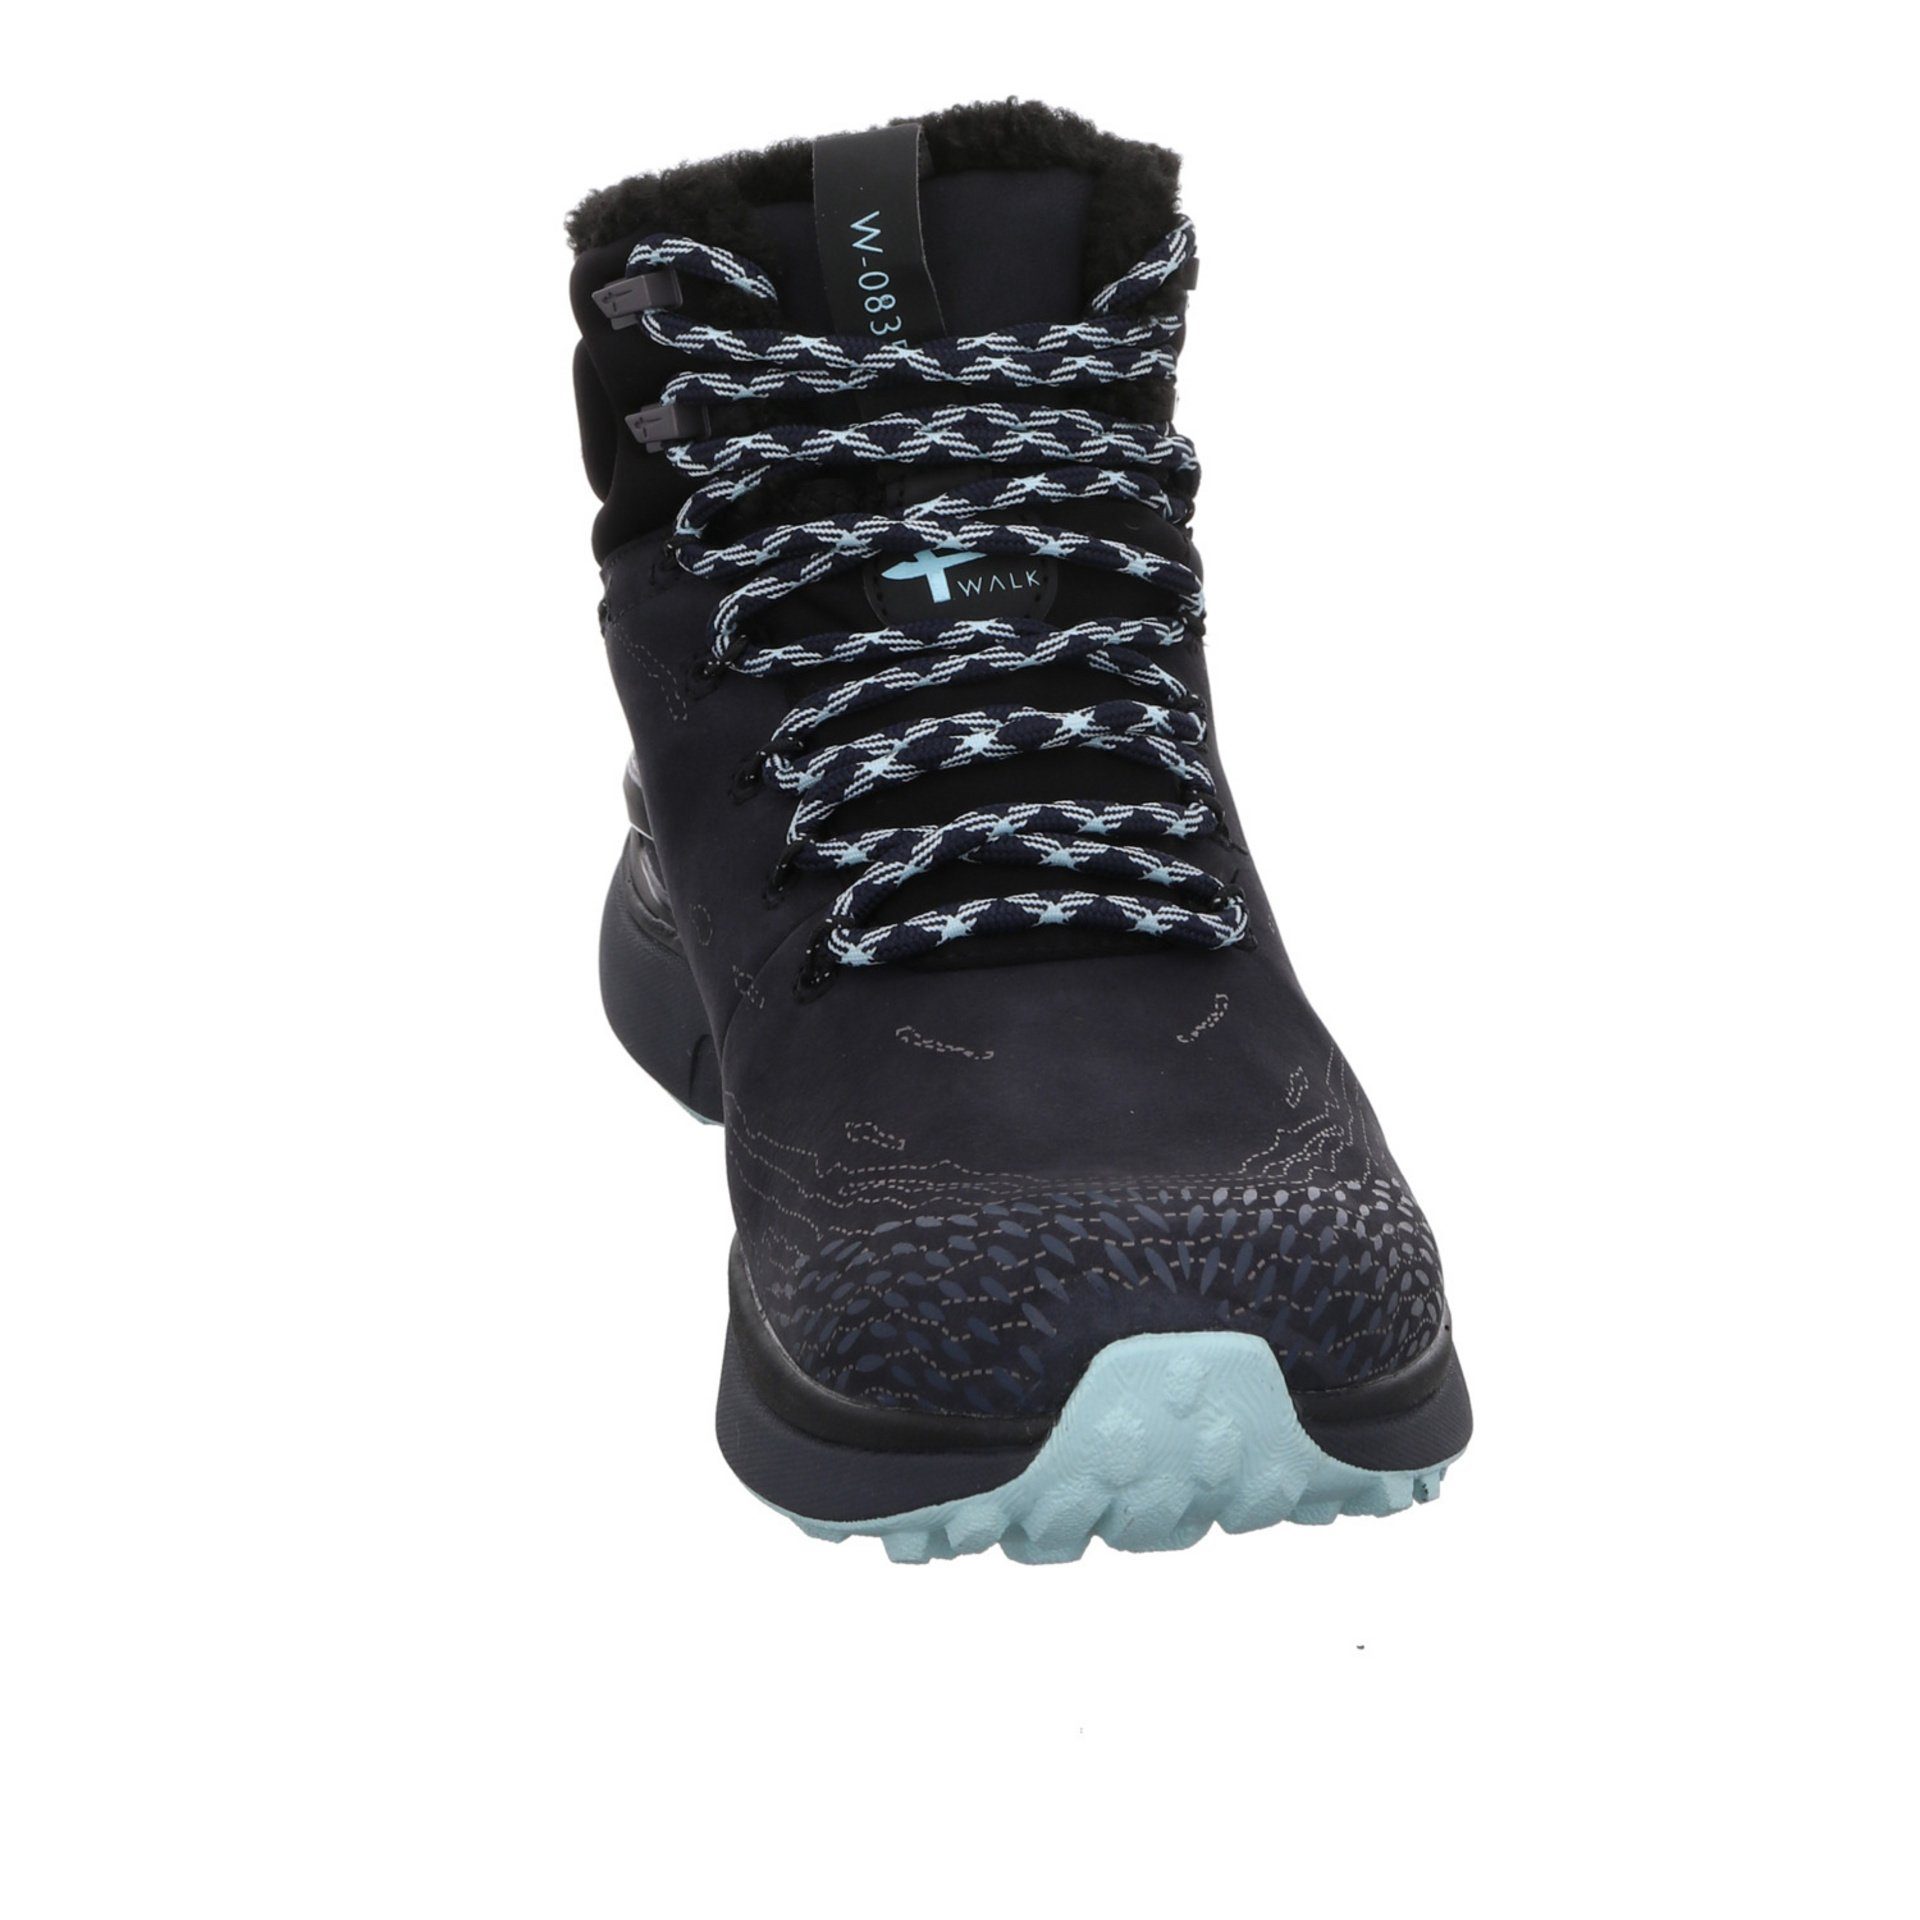 Schuhe Tamaris dunkel Outdoor blau Outdoorschuh Leder-/Textilkombination Outdoorschuh Gore-Tex Damen